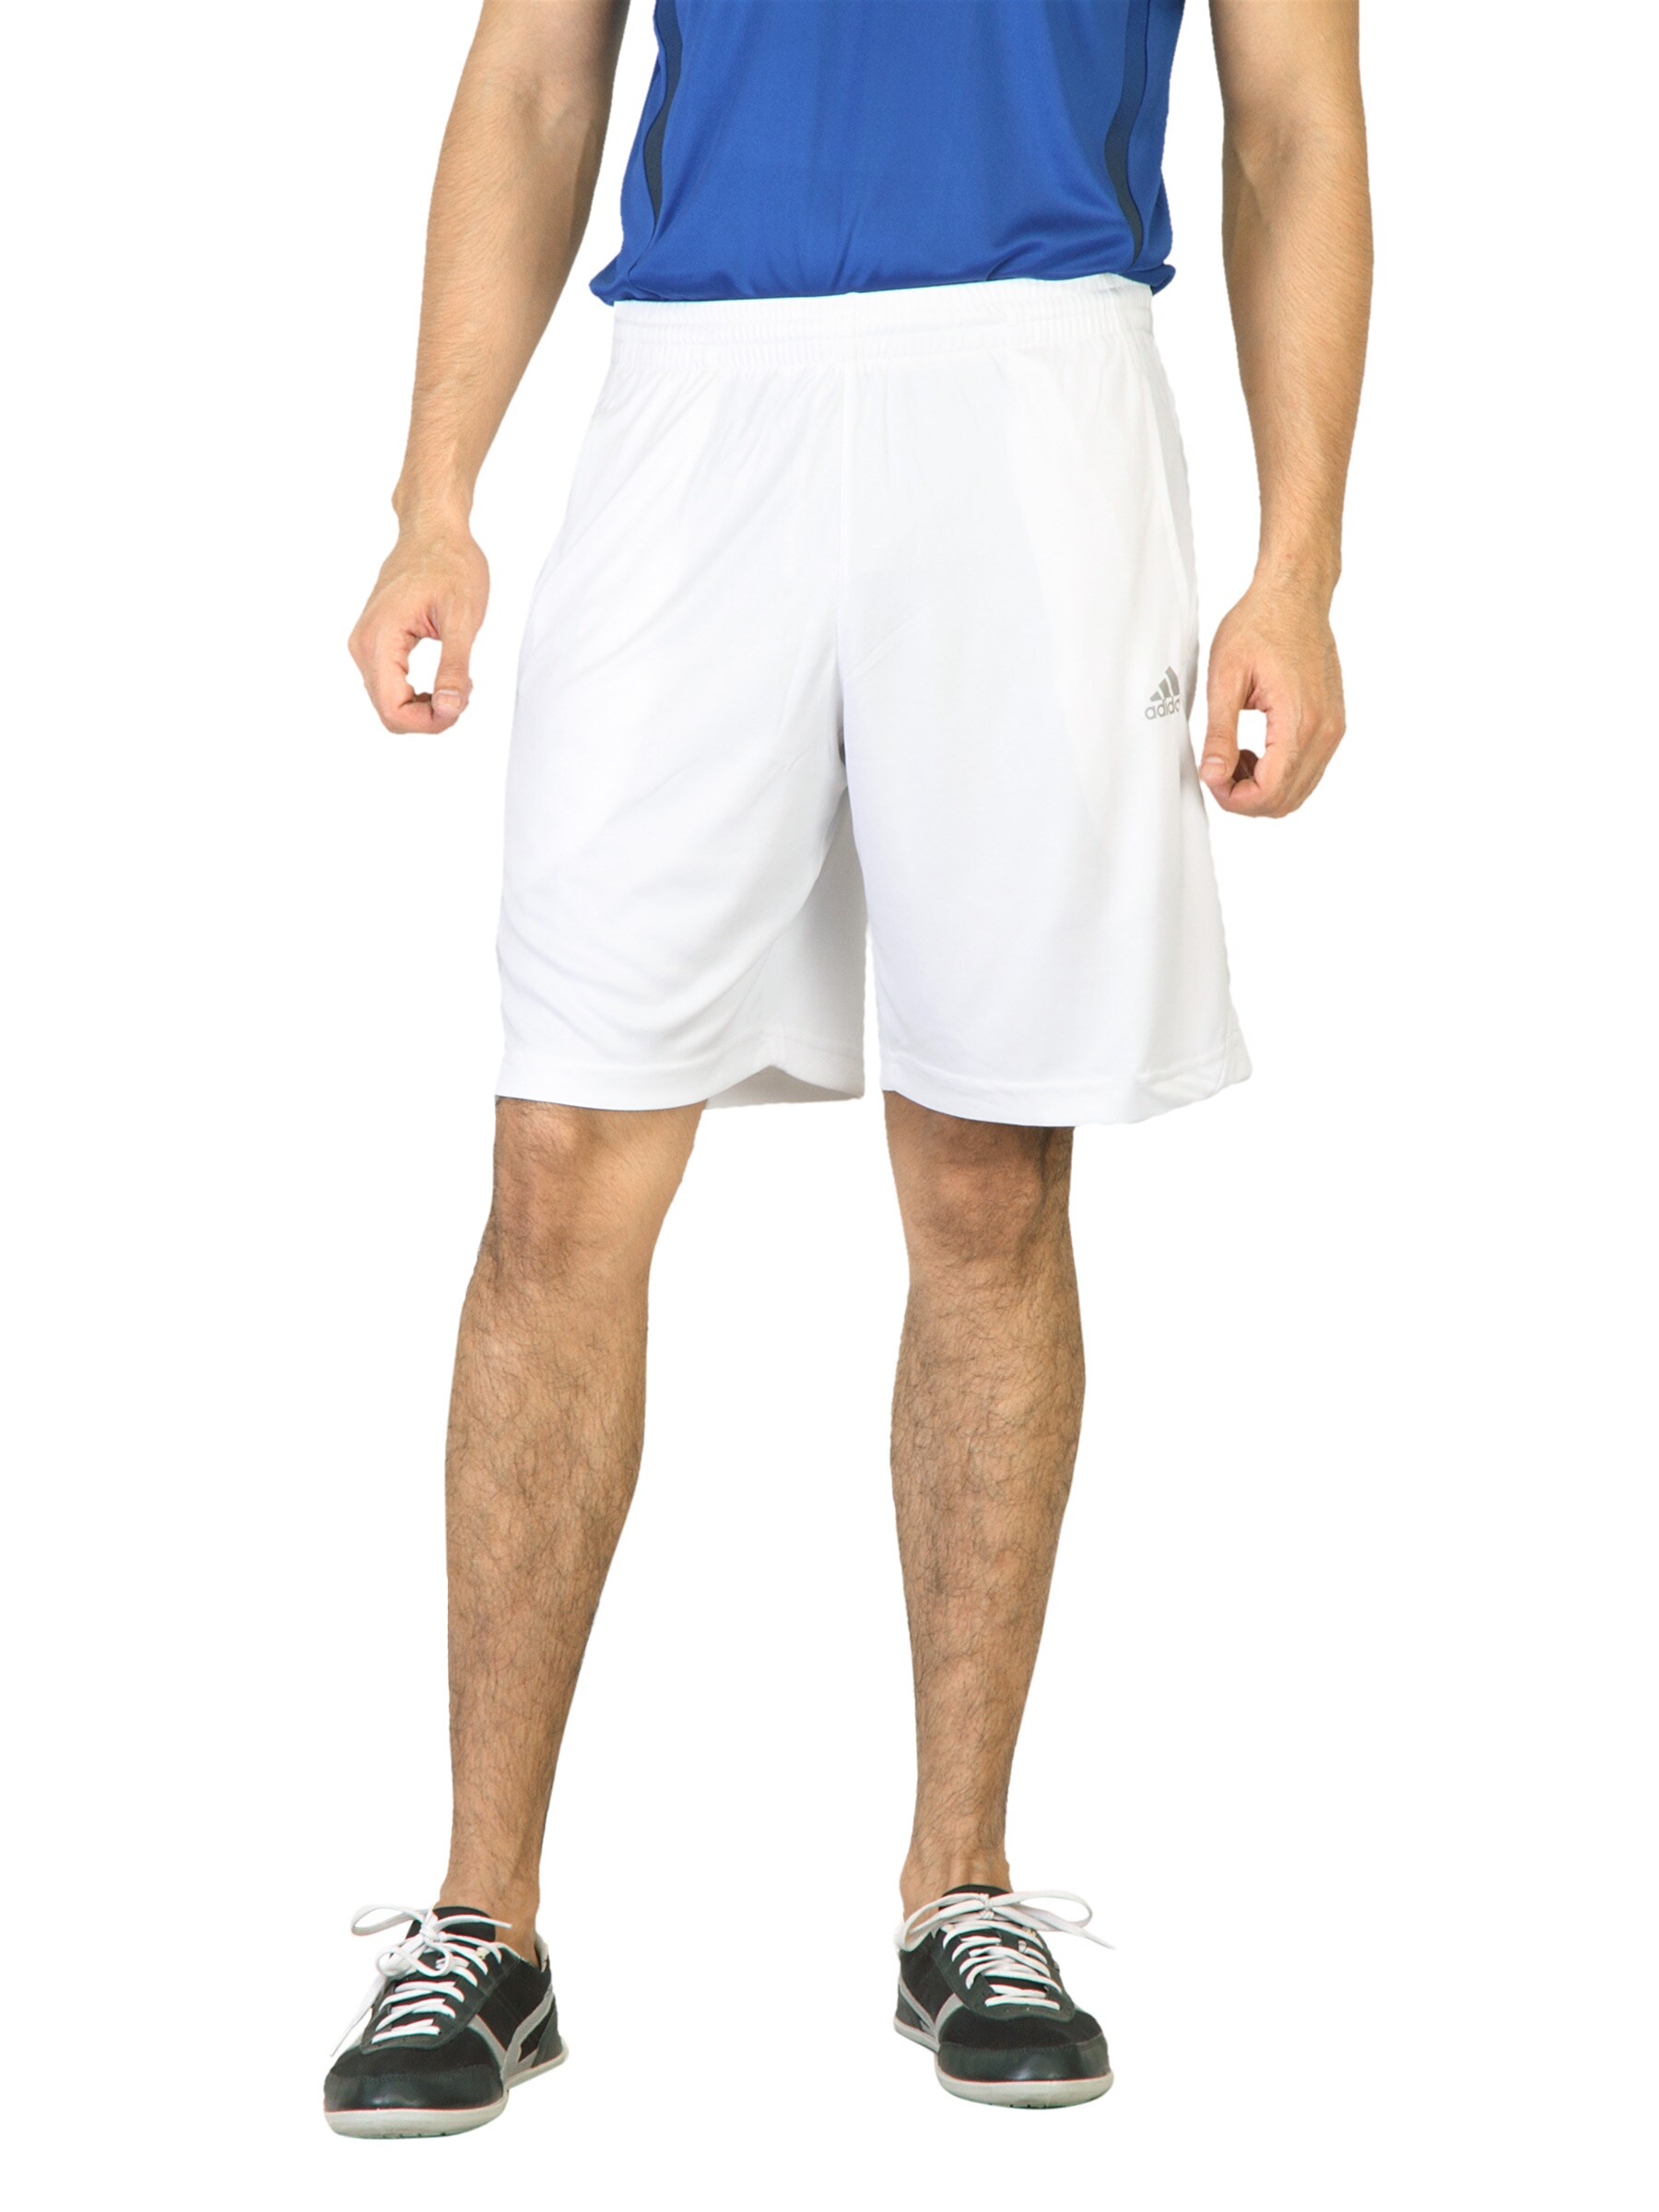 ADIDAS Men Solid White Shorts